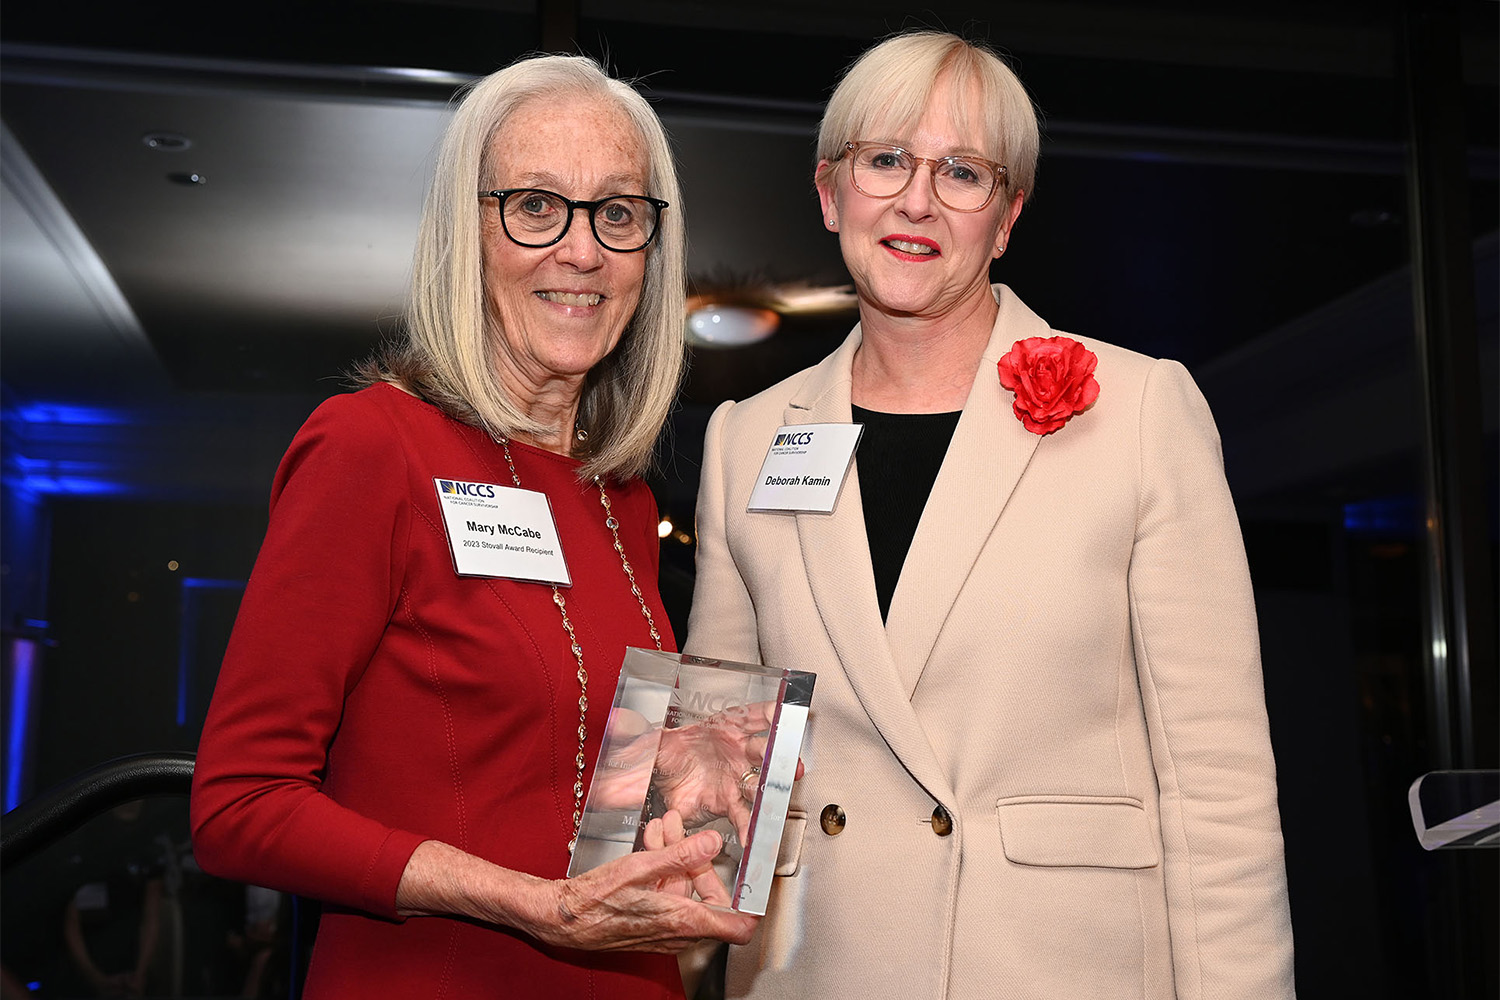 Photo of Mary McCabe receiving Stovall Award from presenter Deborah Kamin